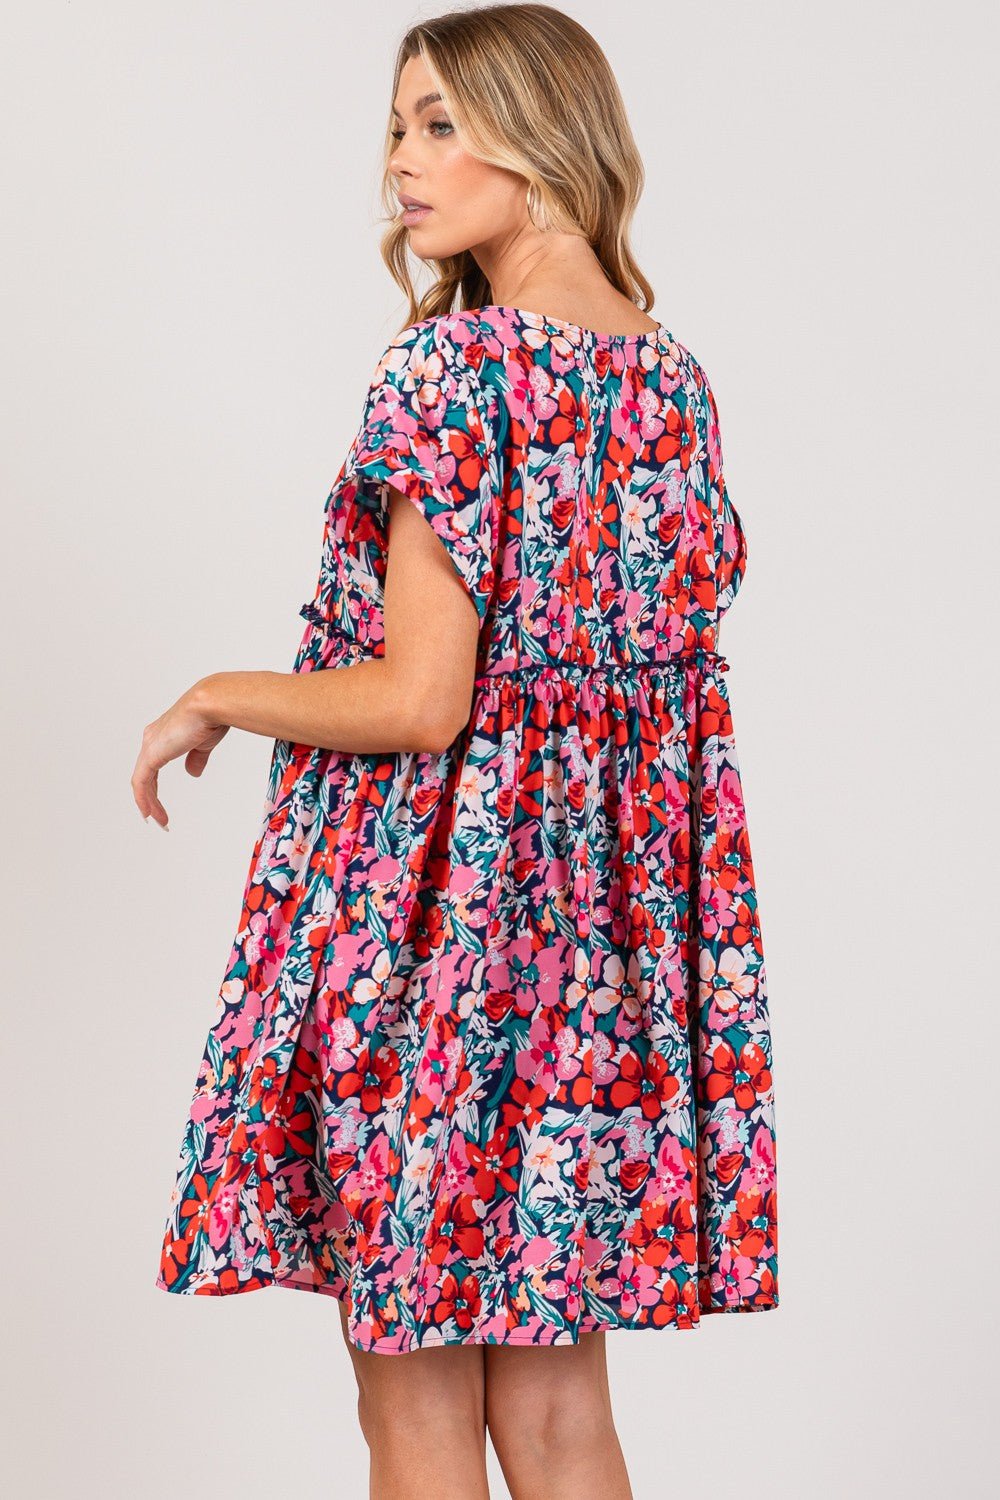 Multicolor Floral Button Down Short Sleeve Mini DressMini DressSAGE+FIG